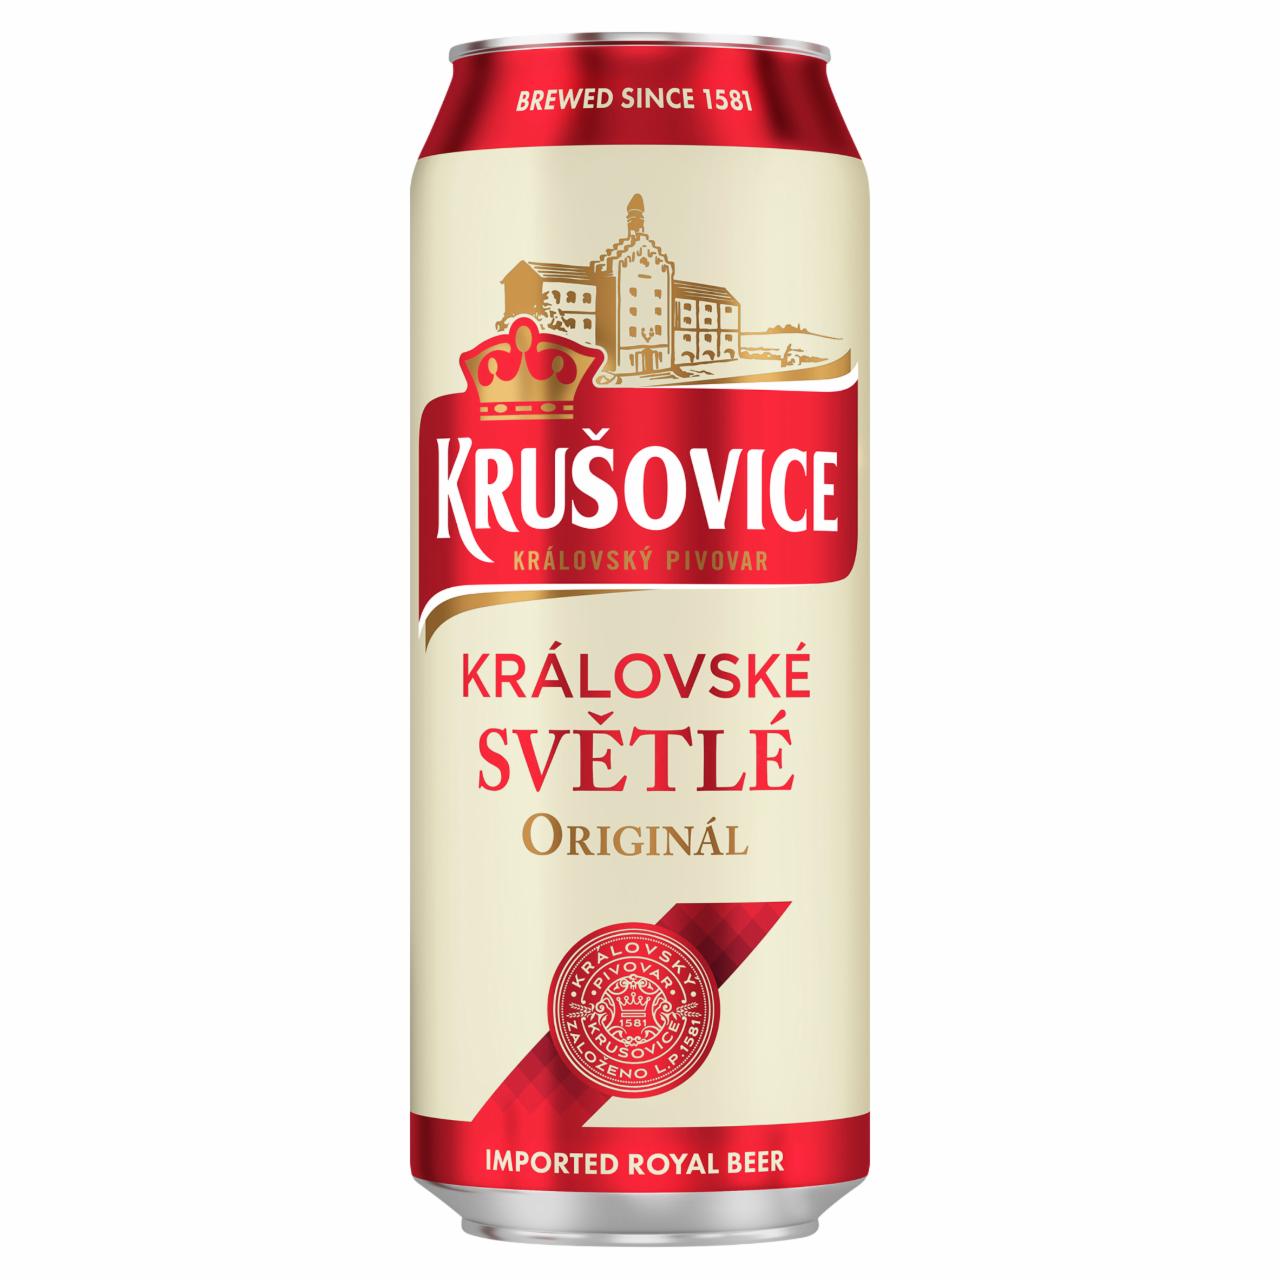 Képek - Krušovice Světlé eredeti cseh import világos sör 4,2% 0,5 l doboz